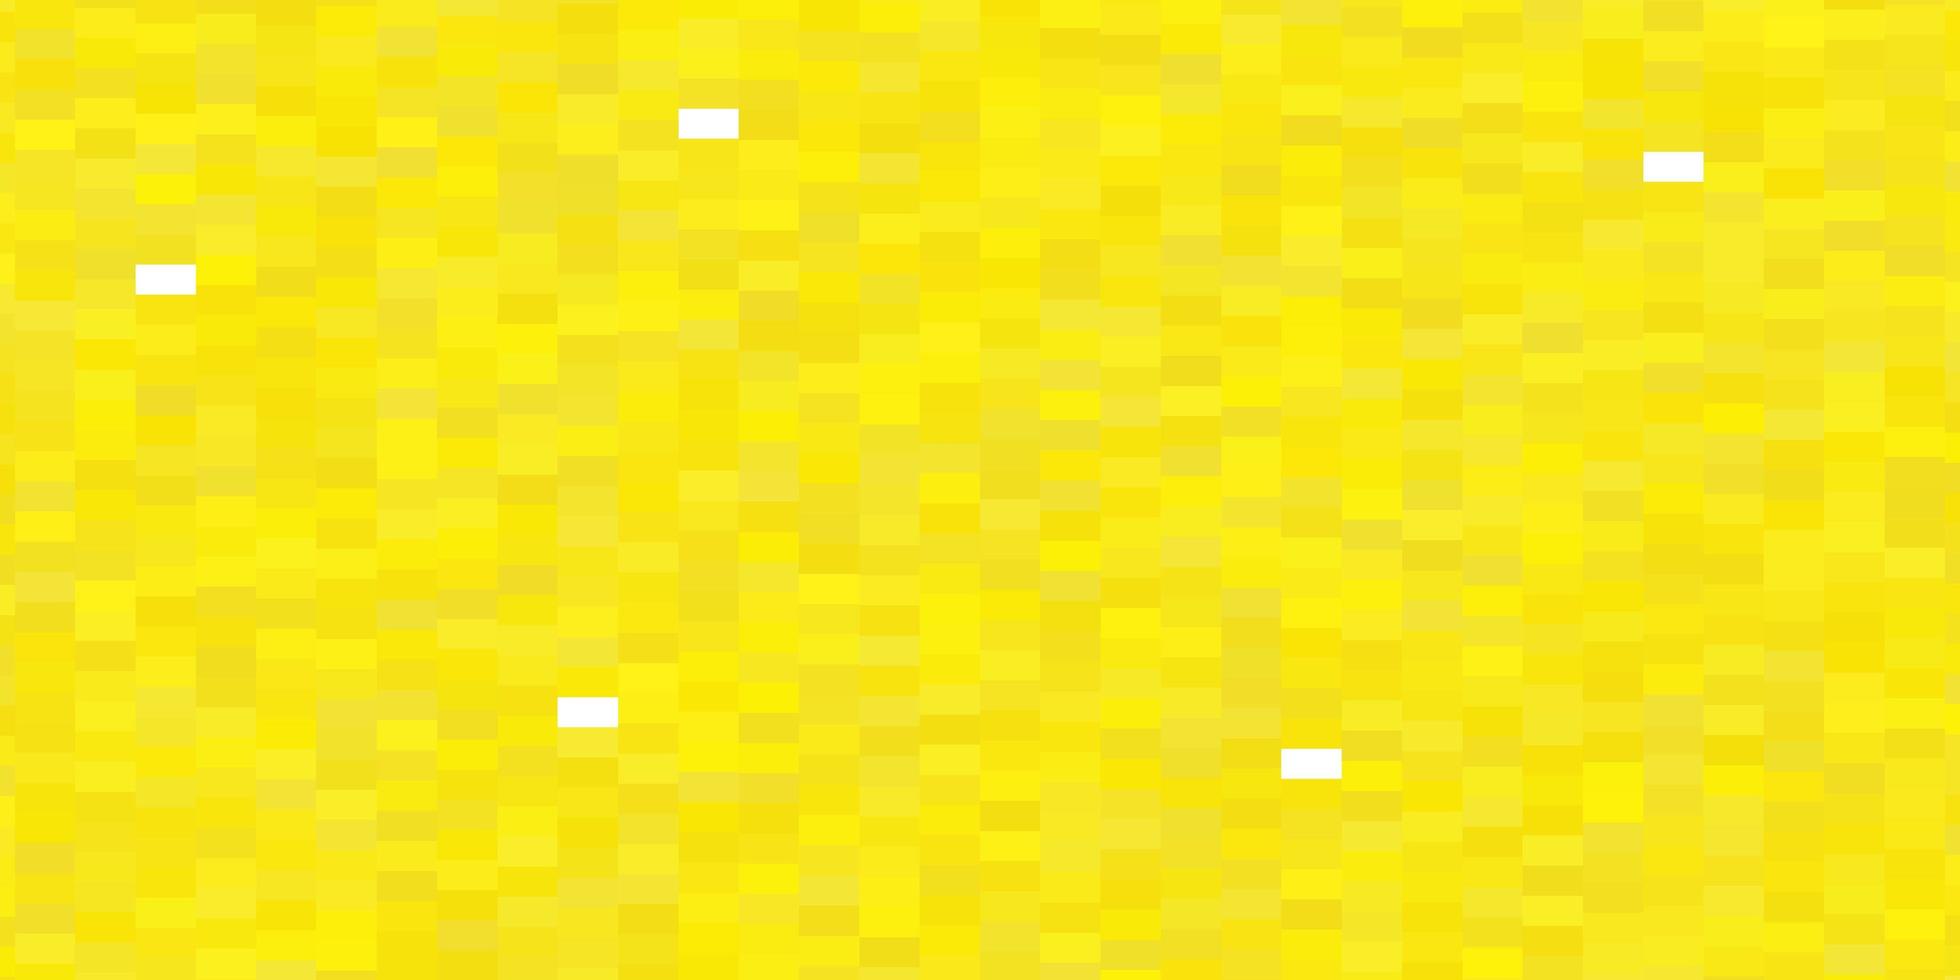 Light Yellow vector texture in rectangular style.